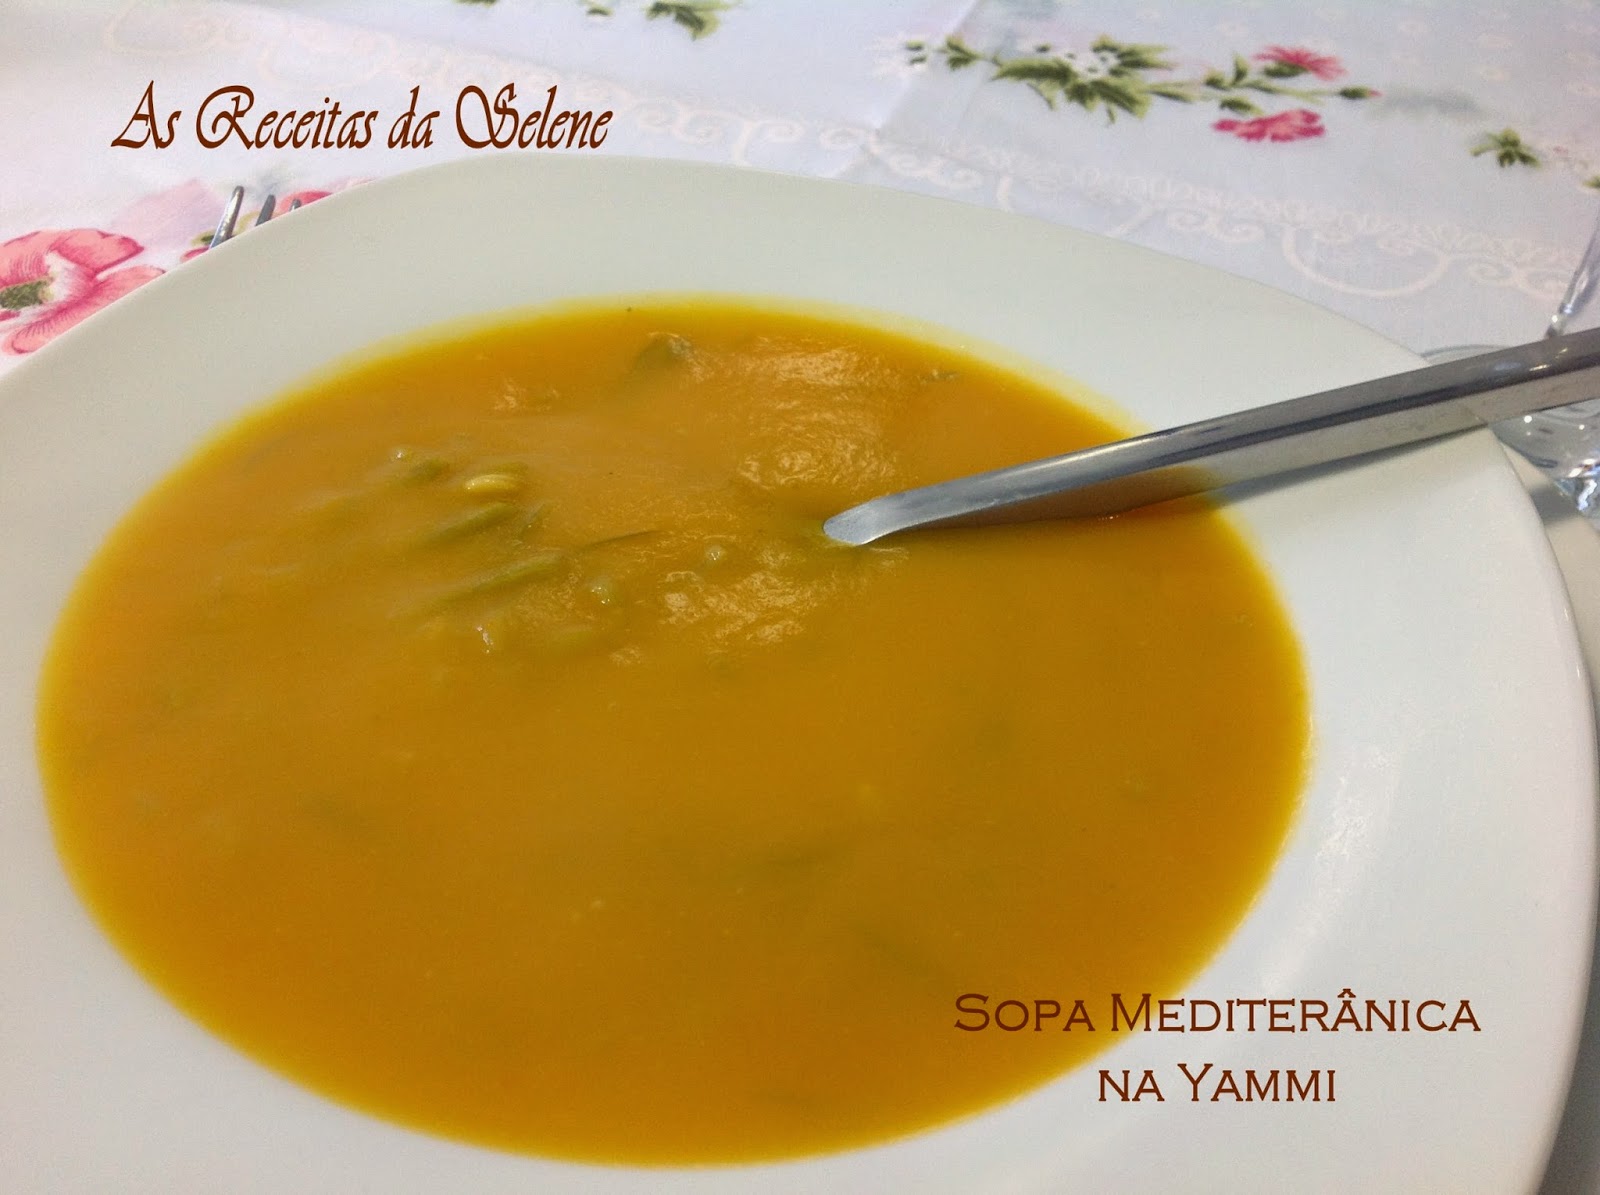 Sopa Mediterrânica na Yammi